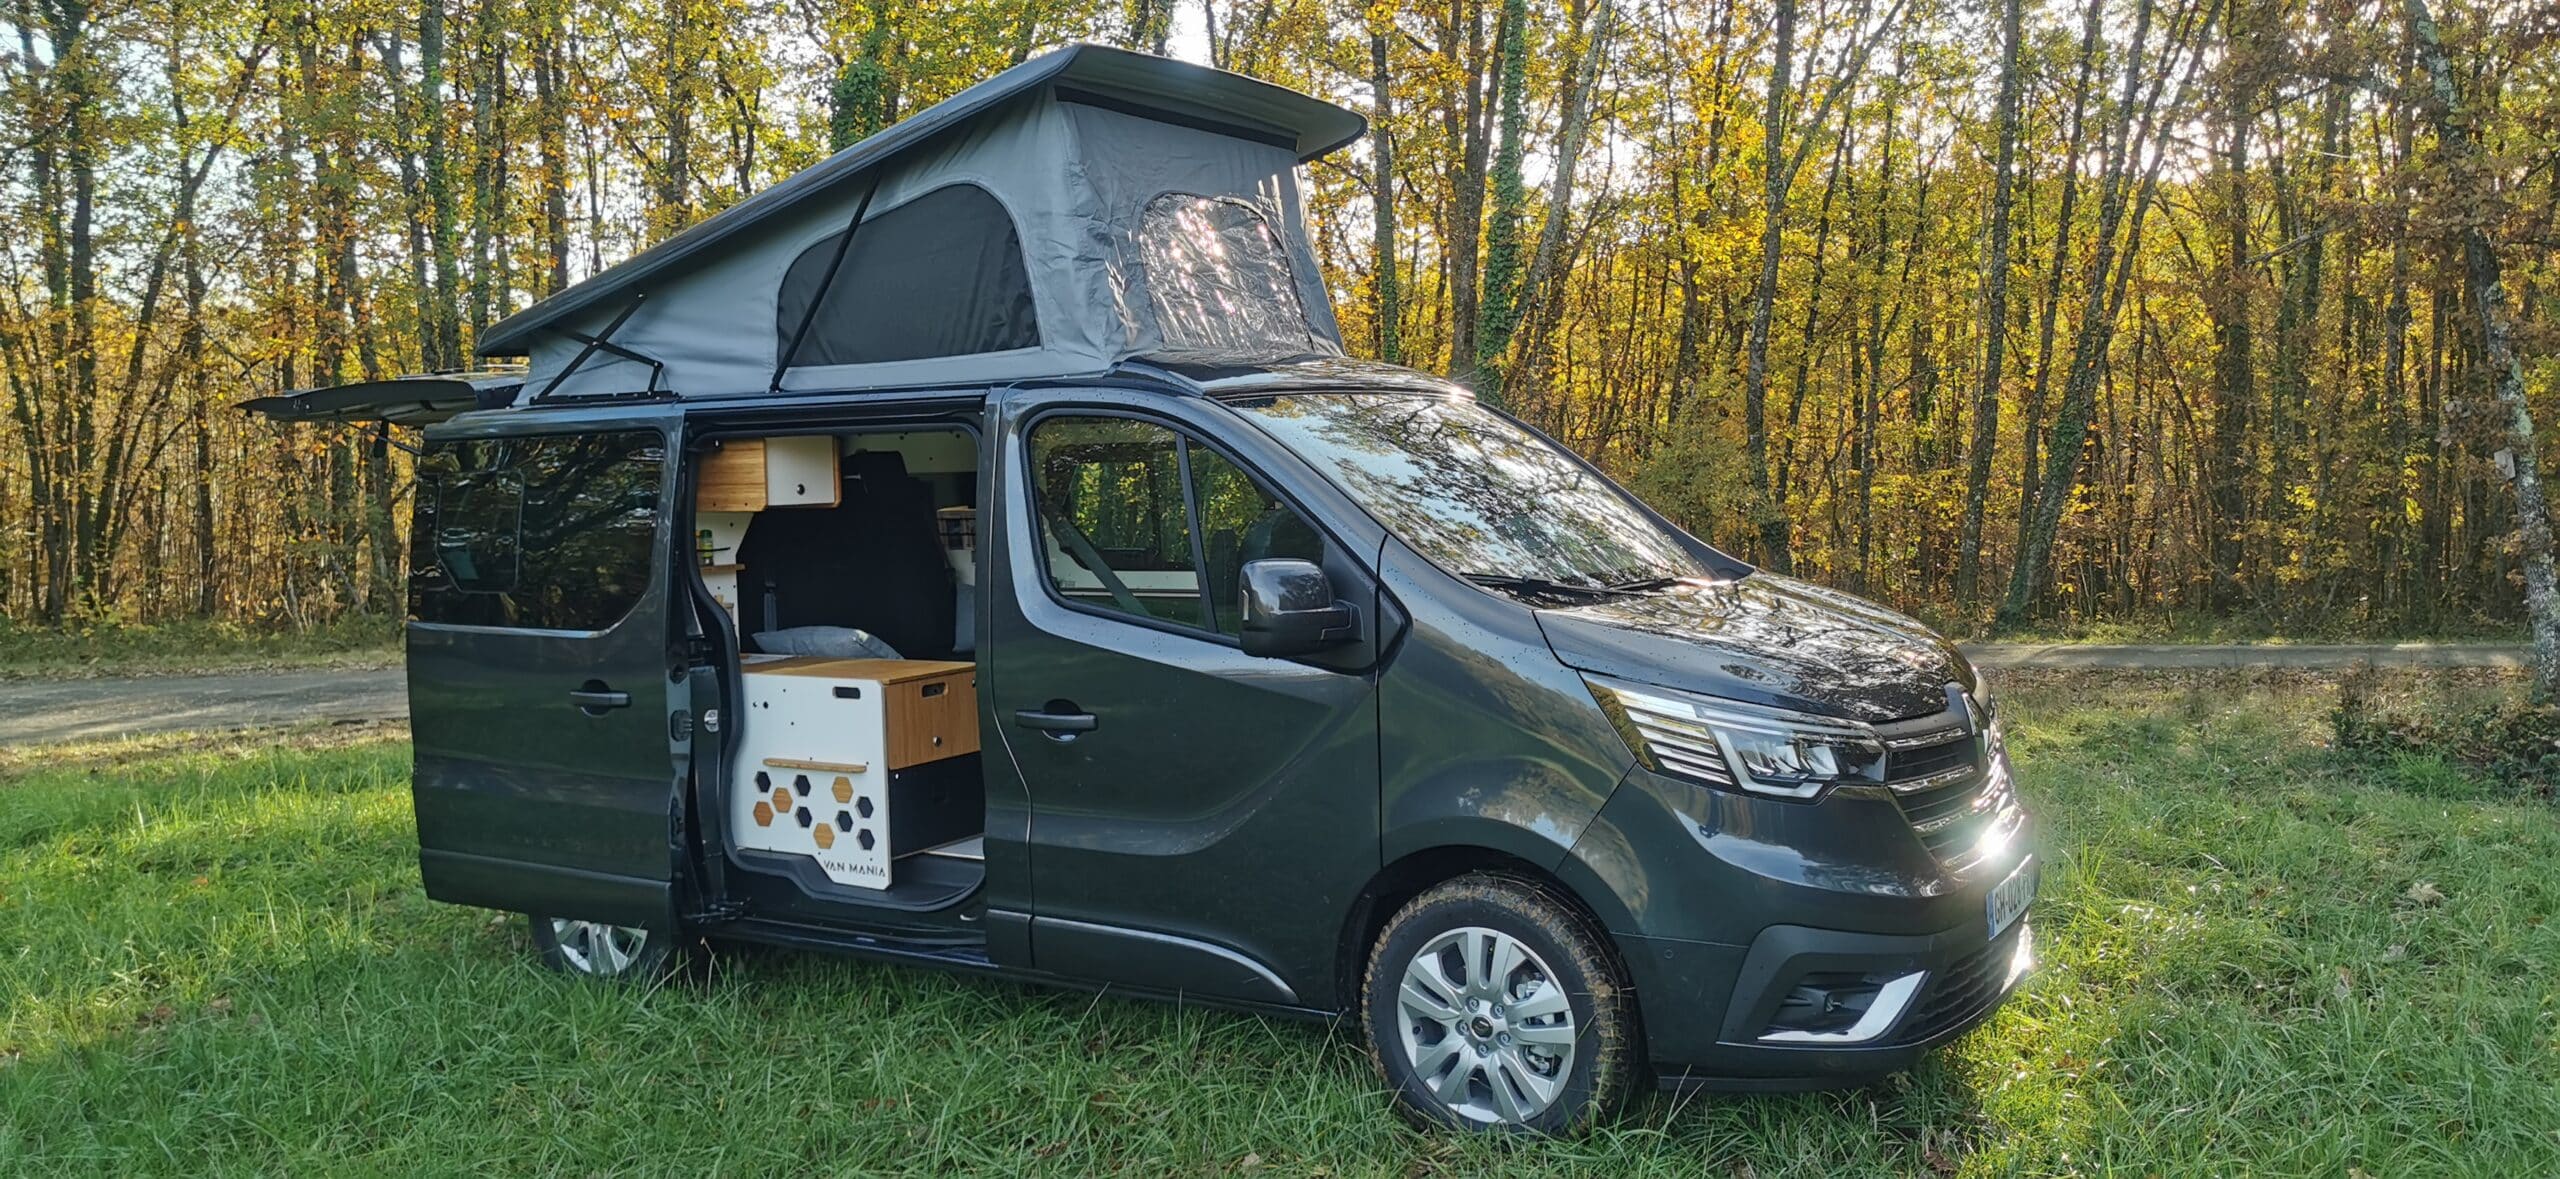 Vend van d'occasion Waïkato, Renault Trafic - Freedom Camper